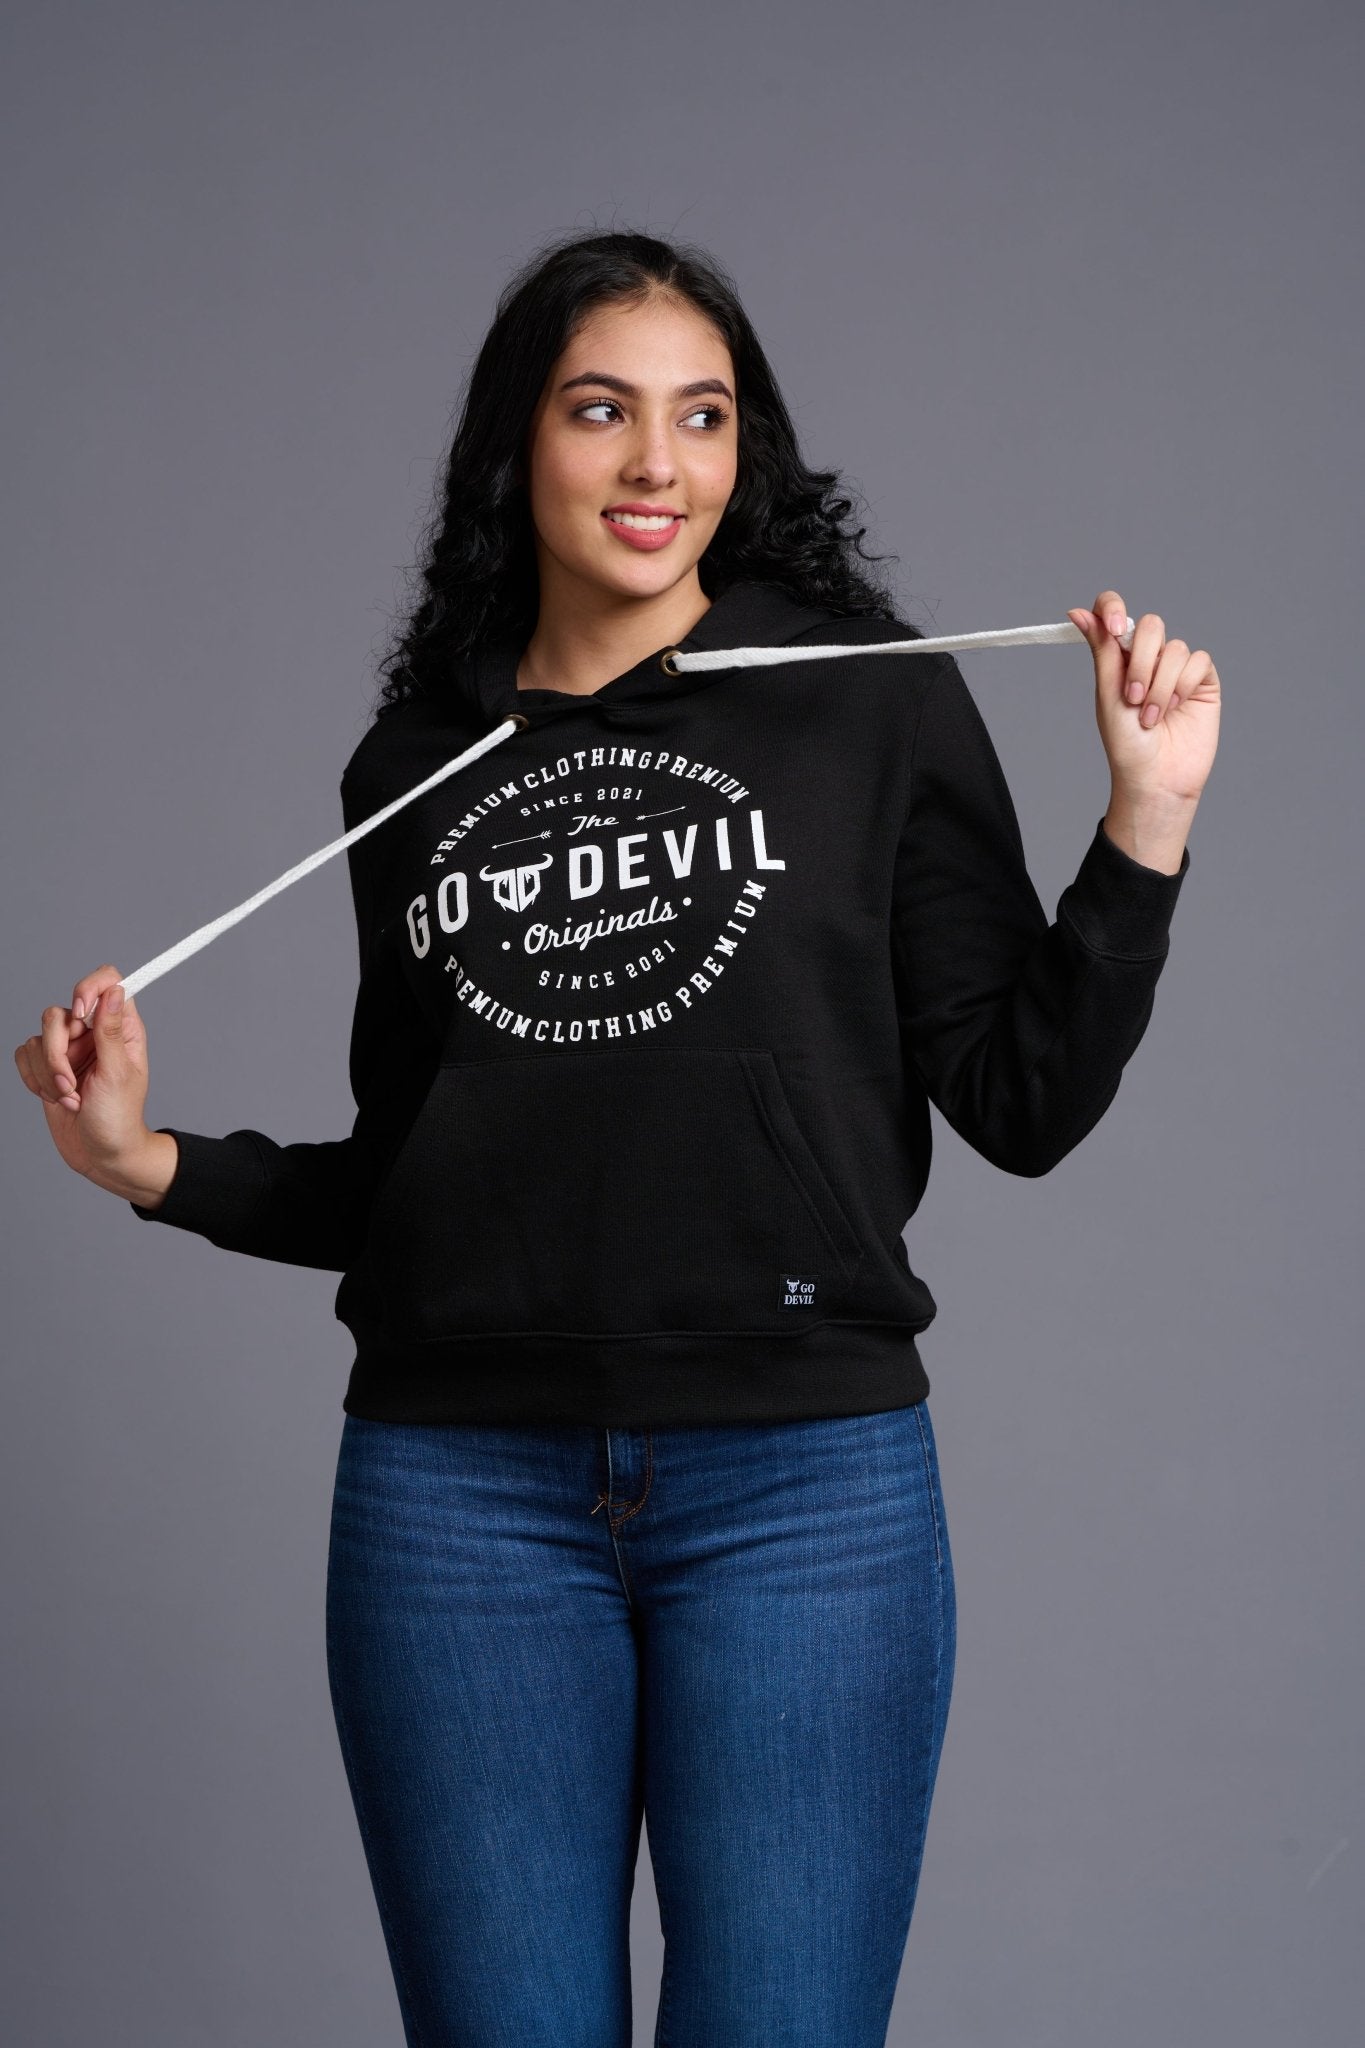 Go Devil Originals (in White) Printed Black Hoodie for Women - Go Devil